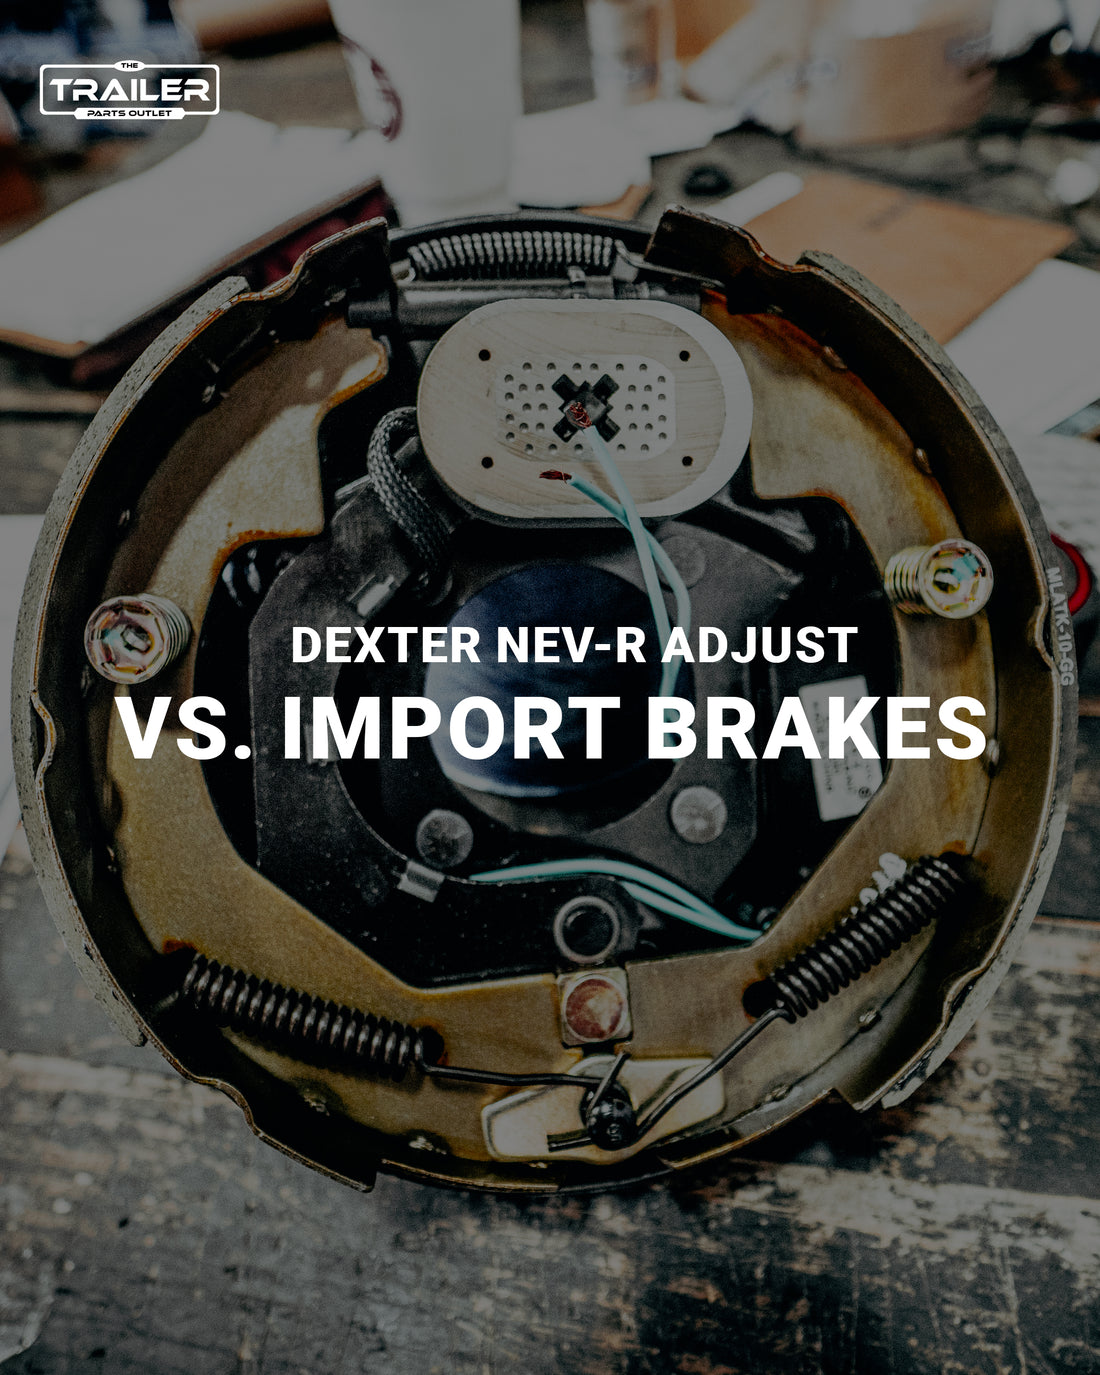 Dexter Nev R Adjust Brakes vs Regular Import Brakes